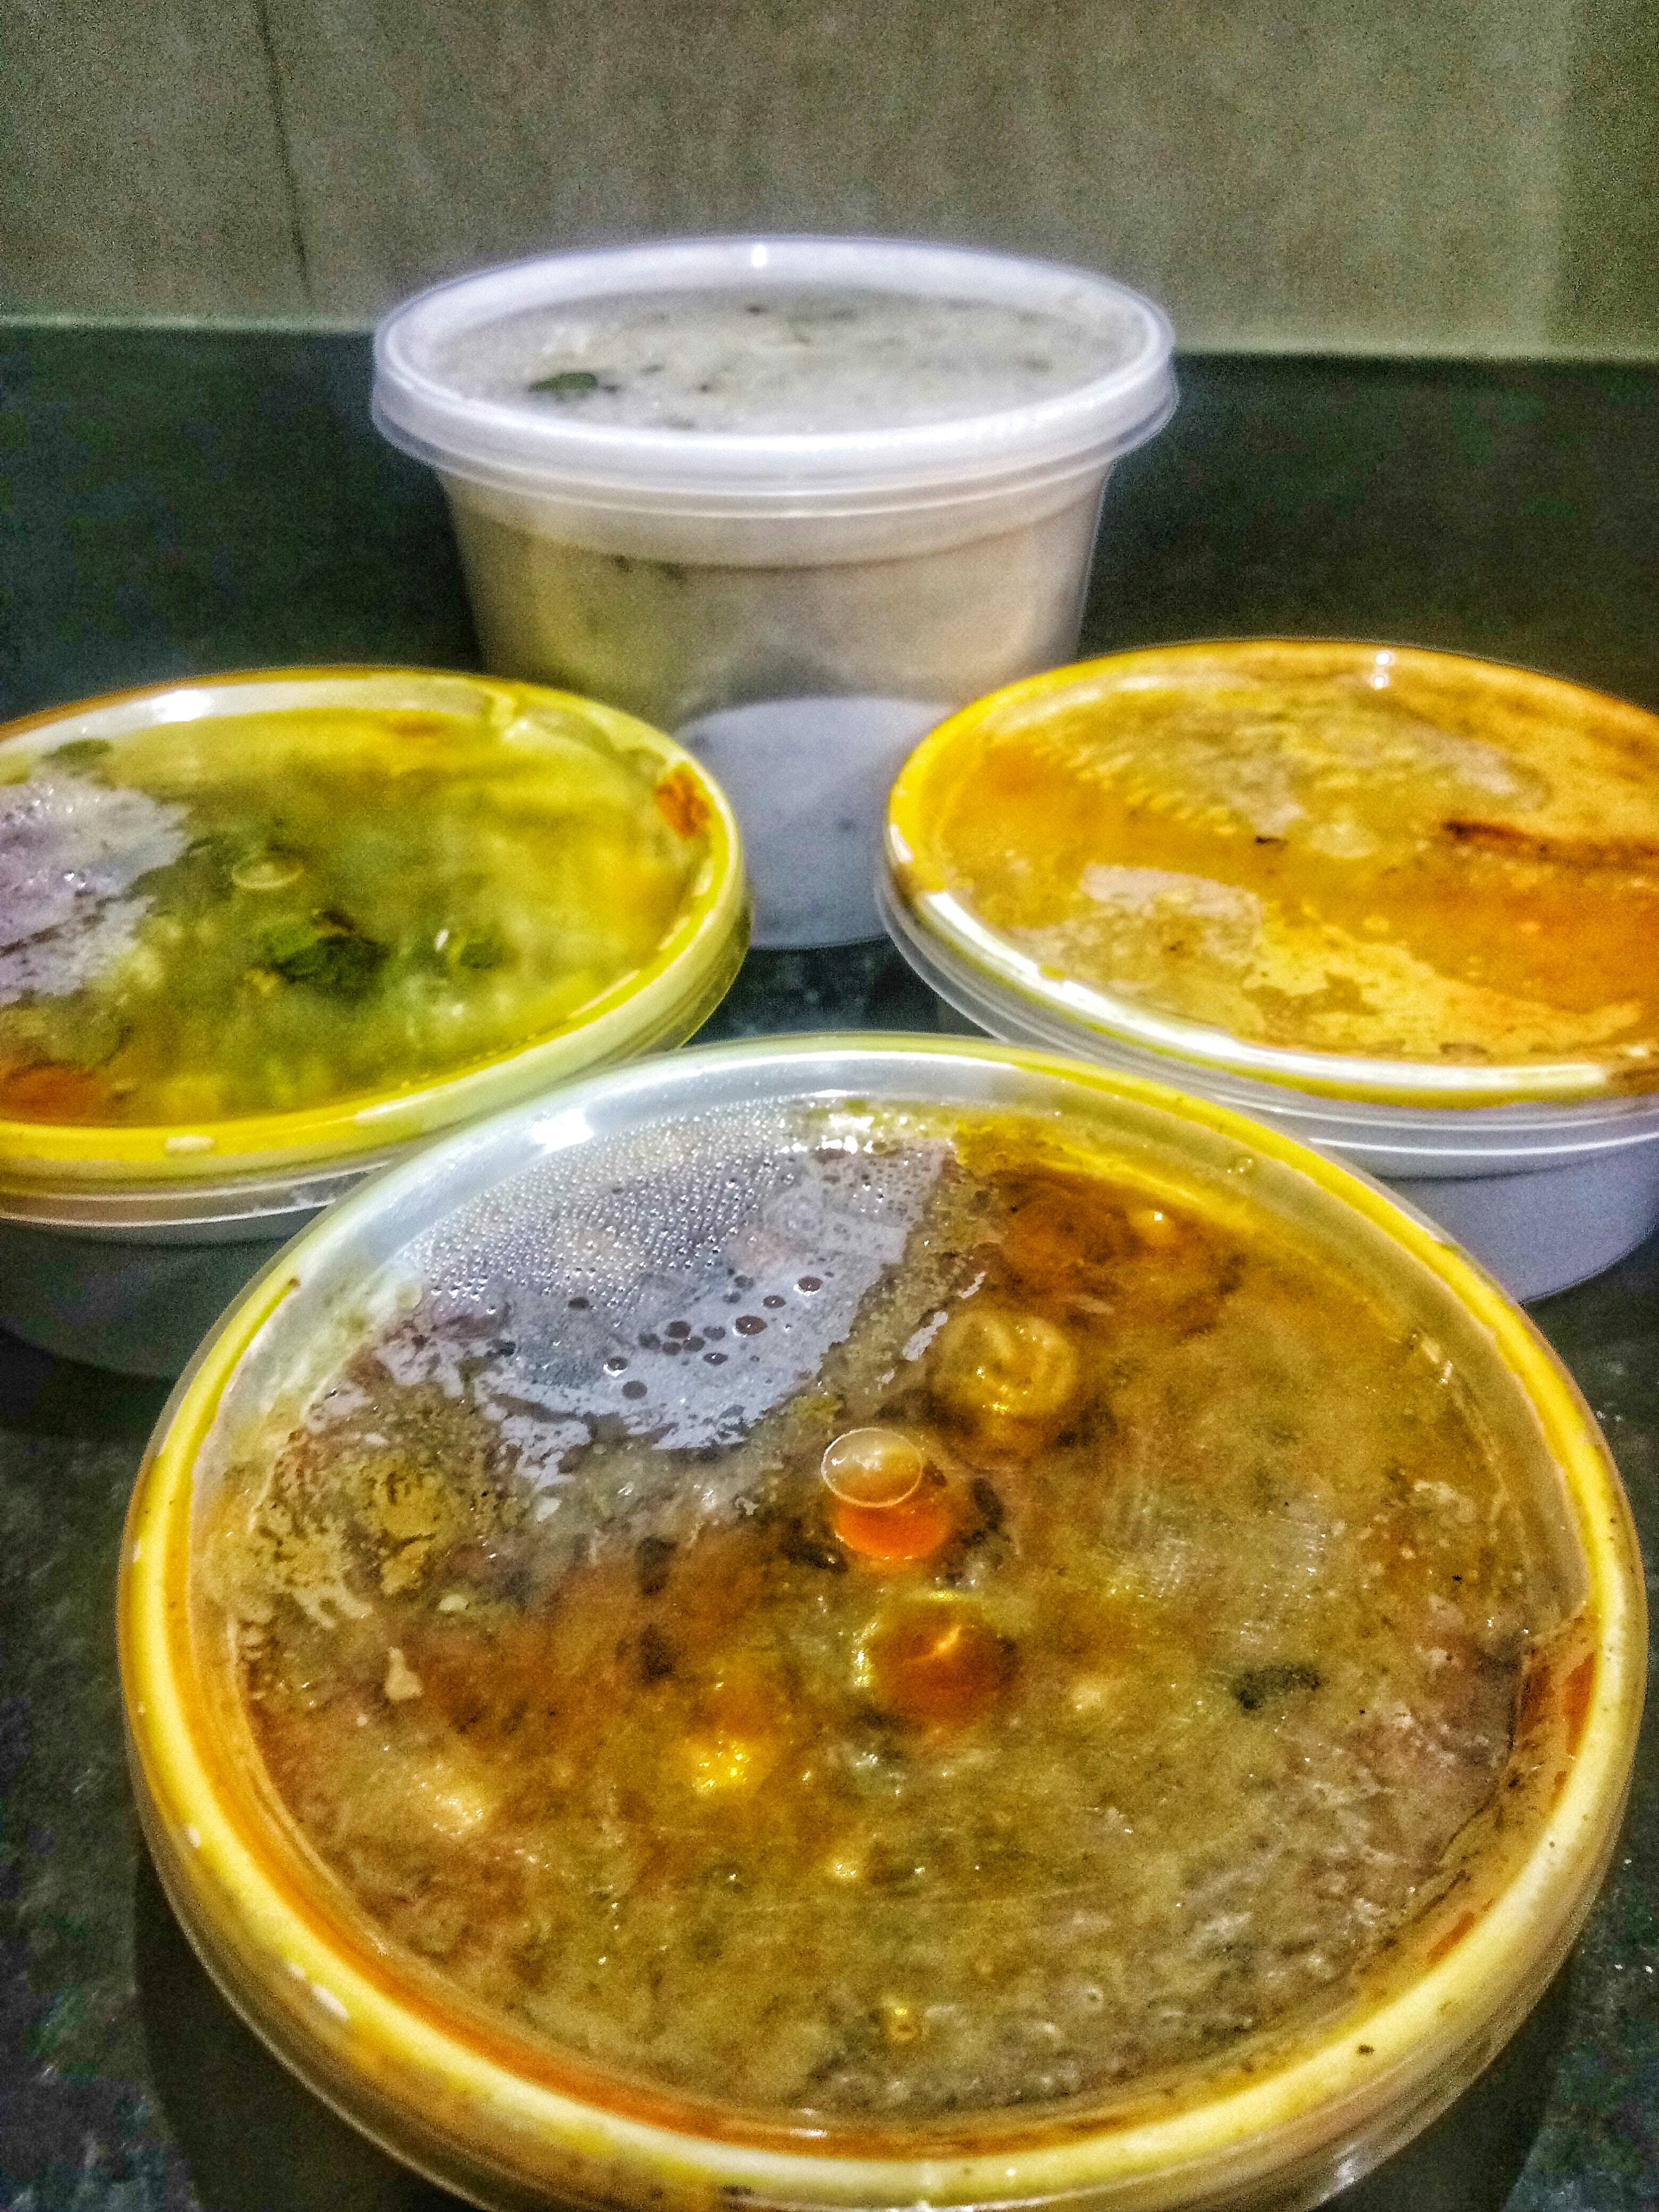 Food,Dish,Cuisine,Ingredient,Curry,Indian cuisine,Rasam,Gravy,Produce,Rajasthani cuisine